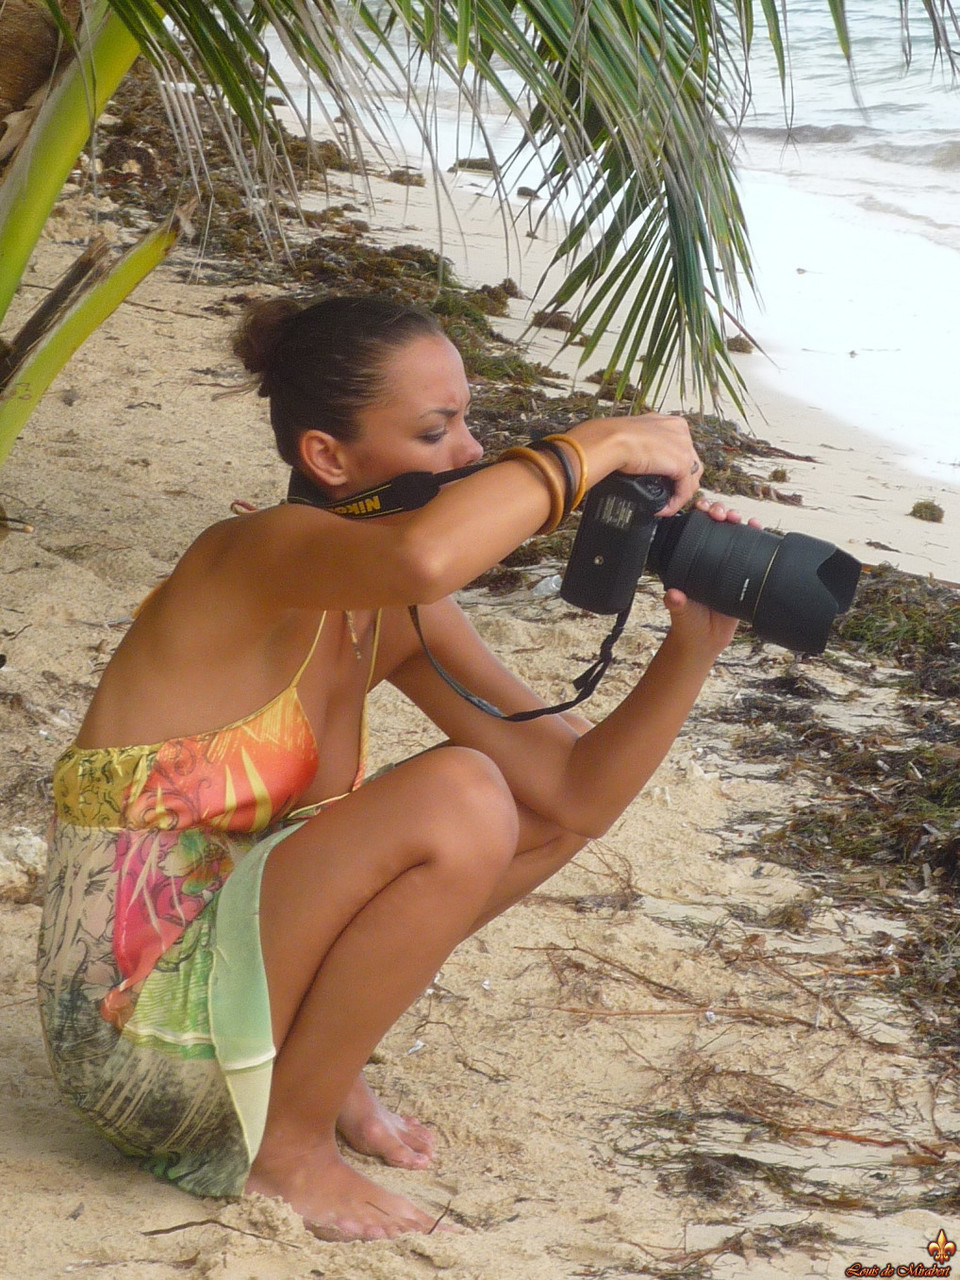 Beautiful girls work free of their swimwear while modeling on a tropical beach photo porno #424108094